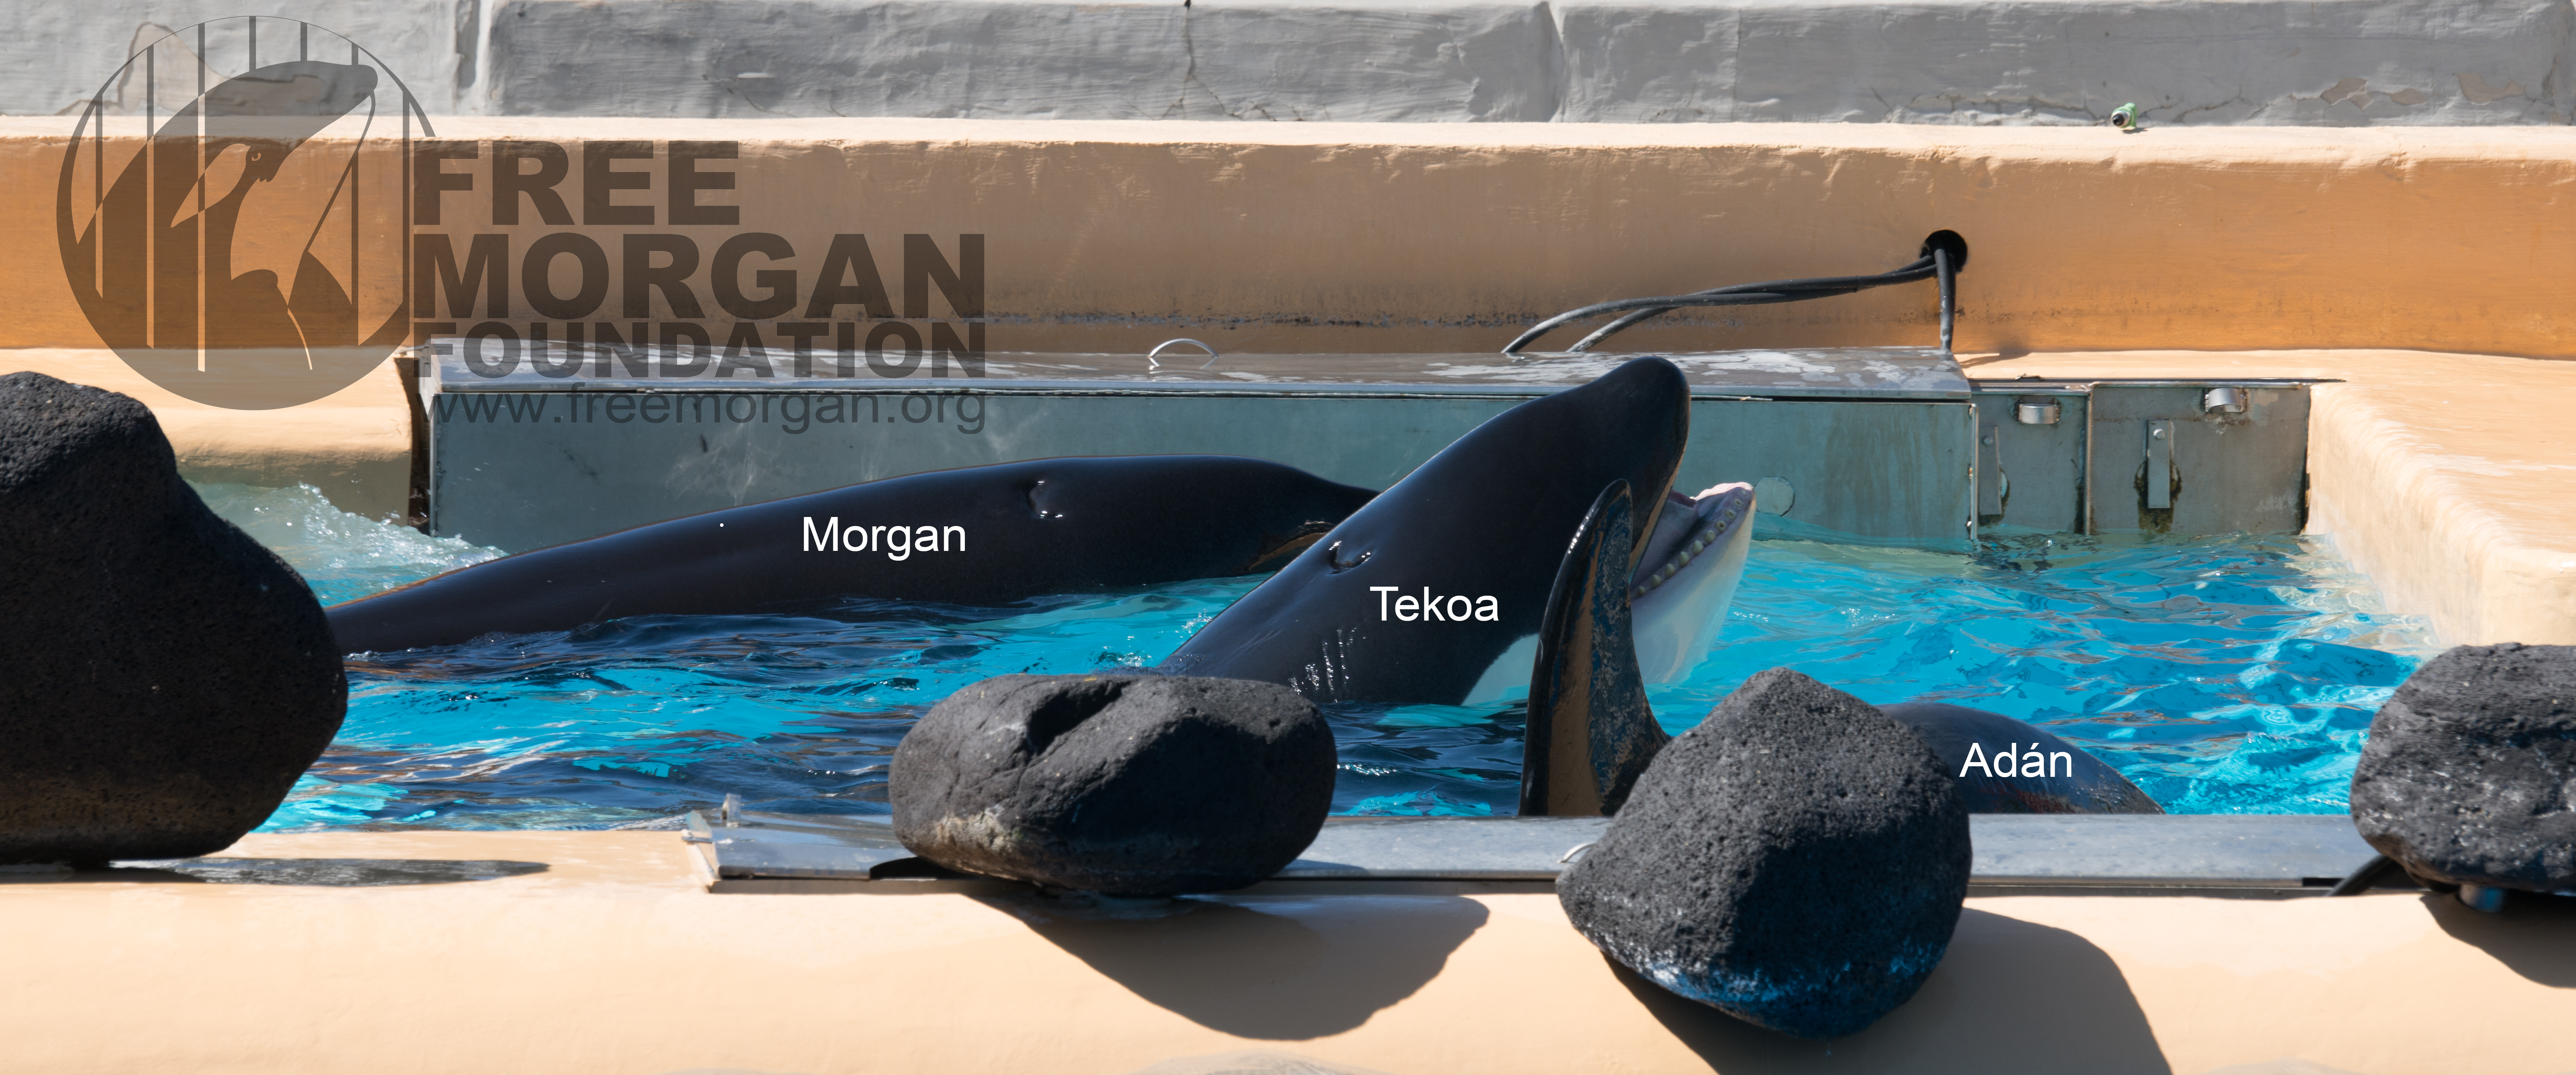 20160422-three orca med tank-logo